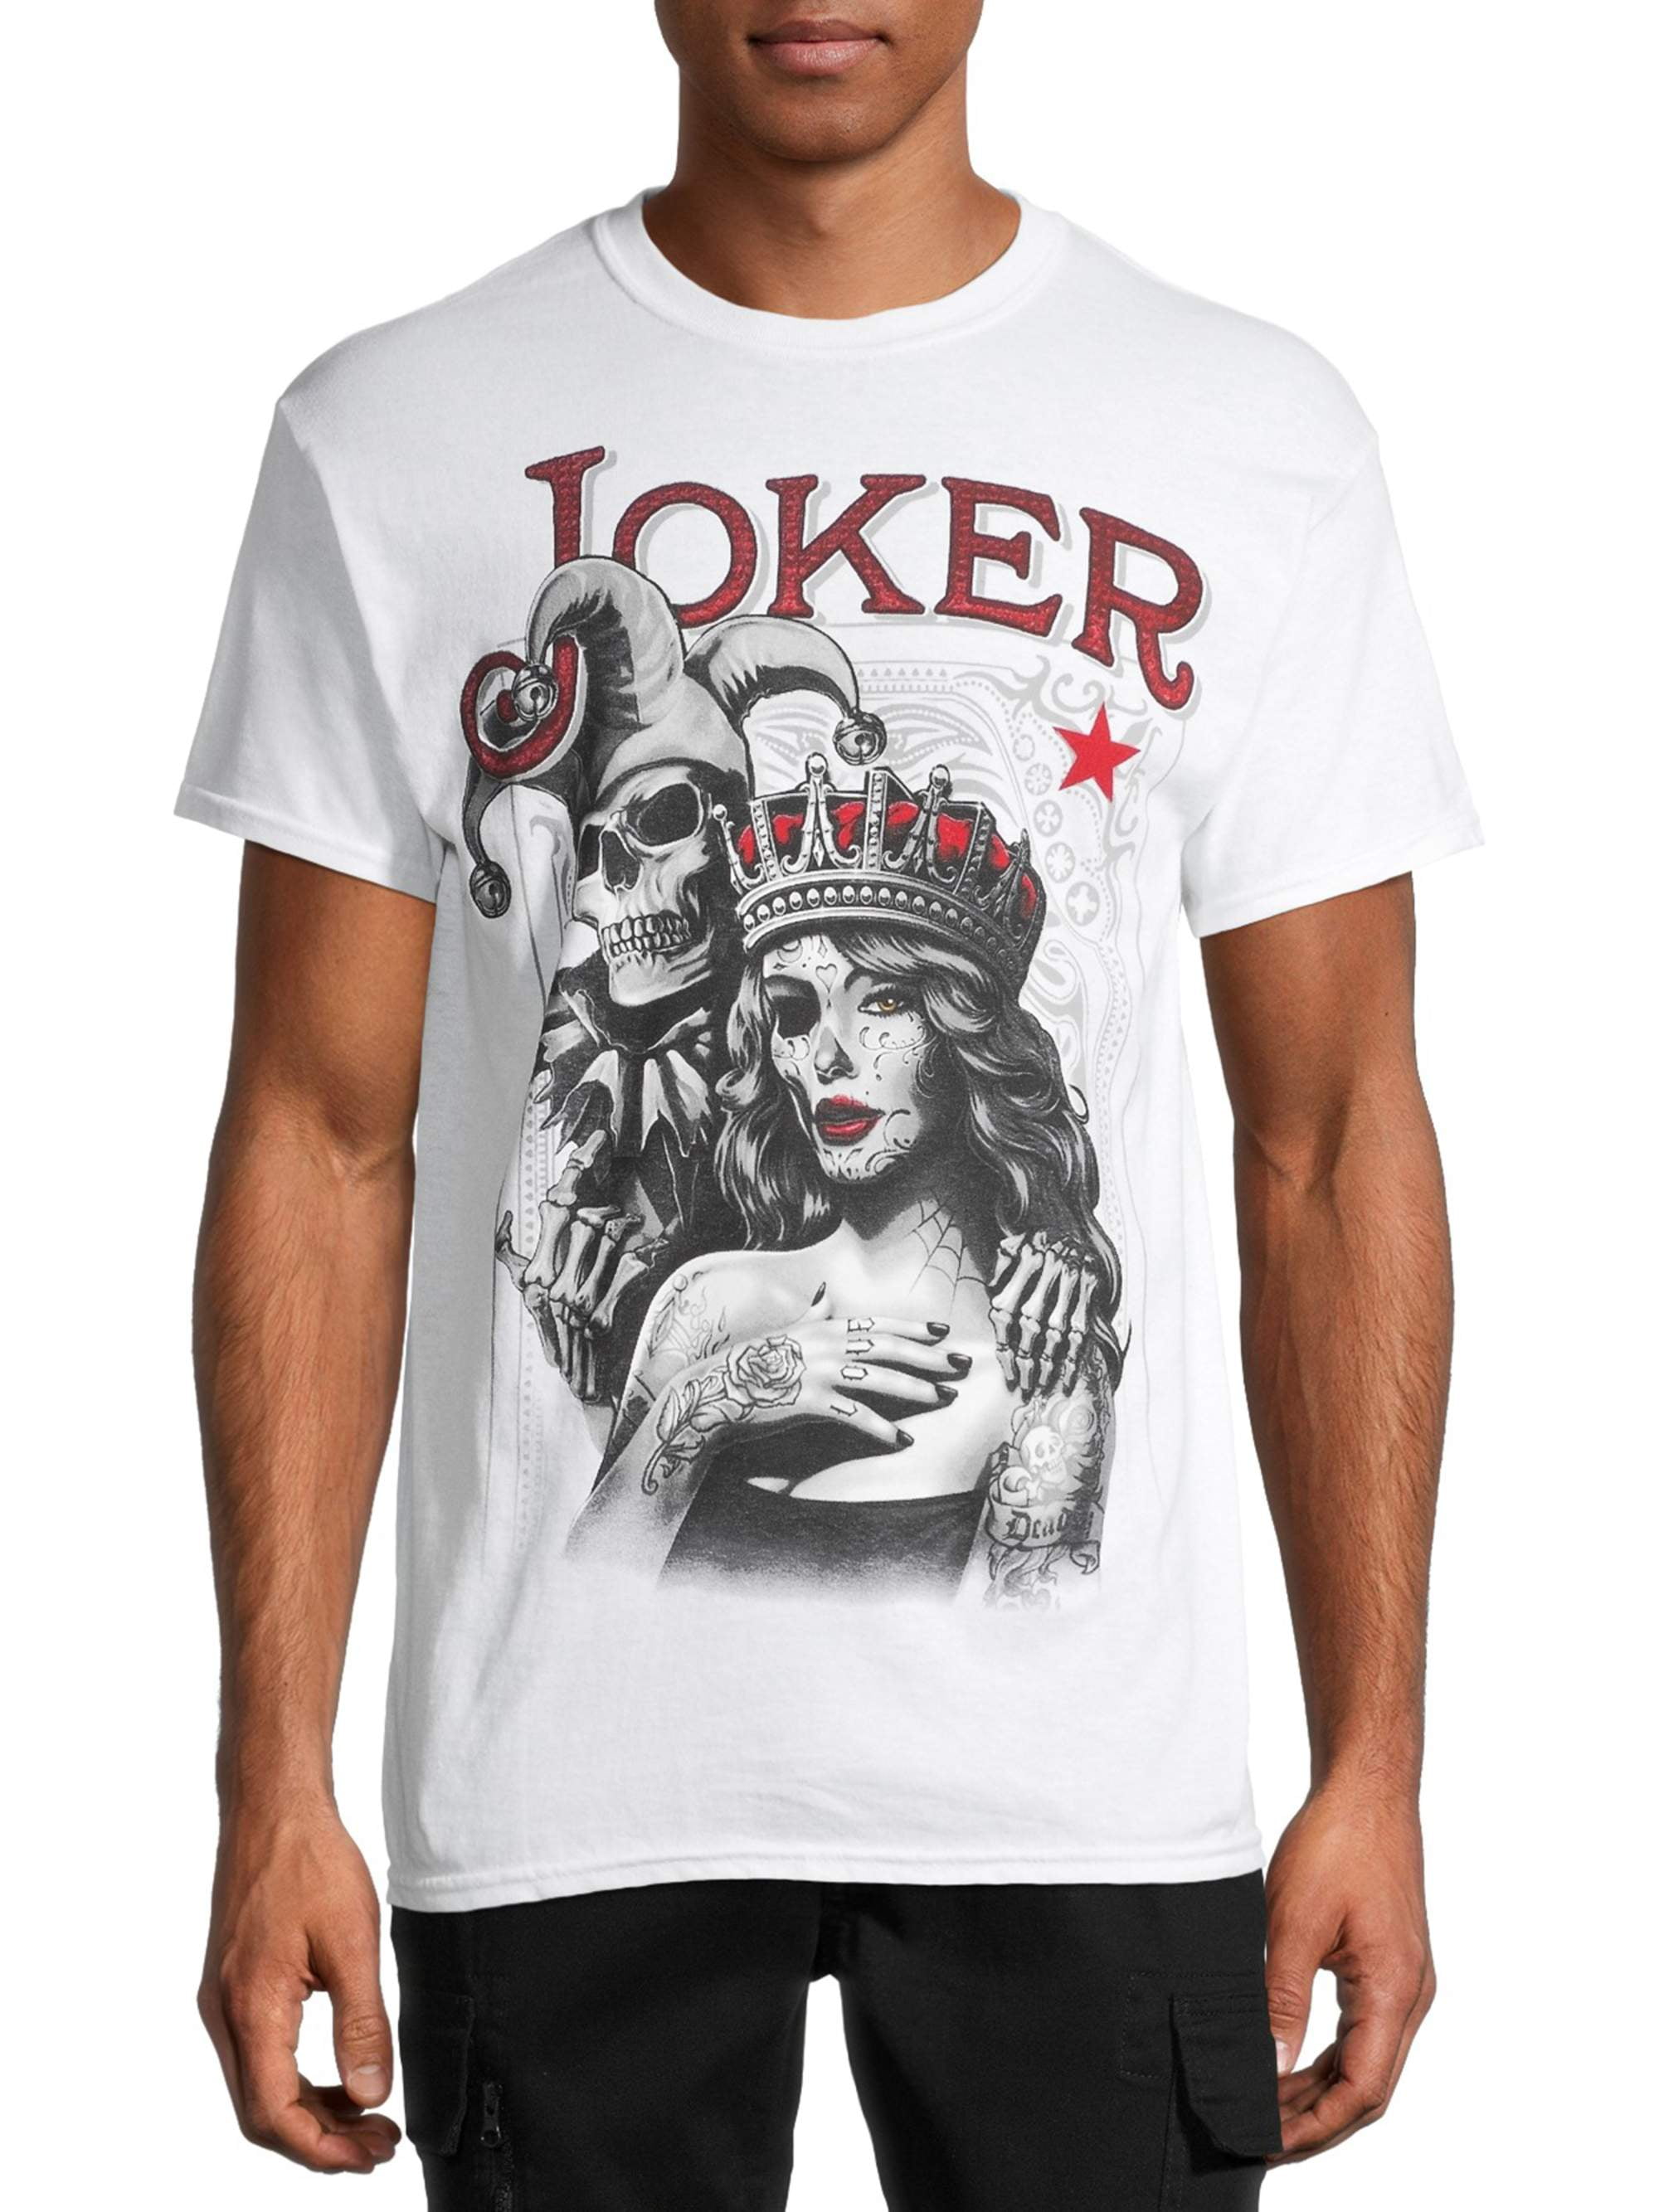 Joker Sketch Men's and Big Men's Graphic T-shirt - Walmart.com